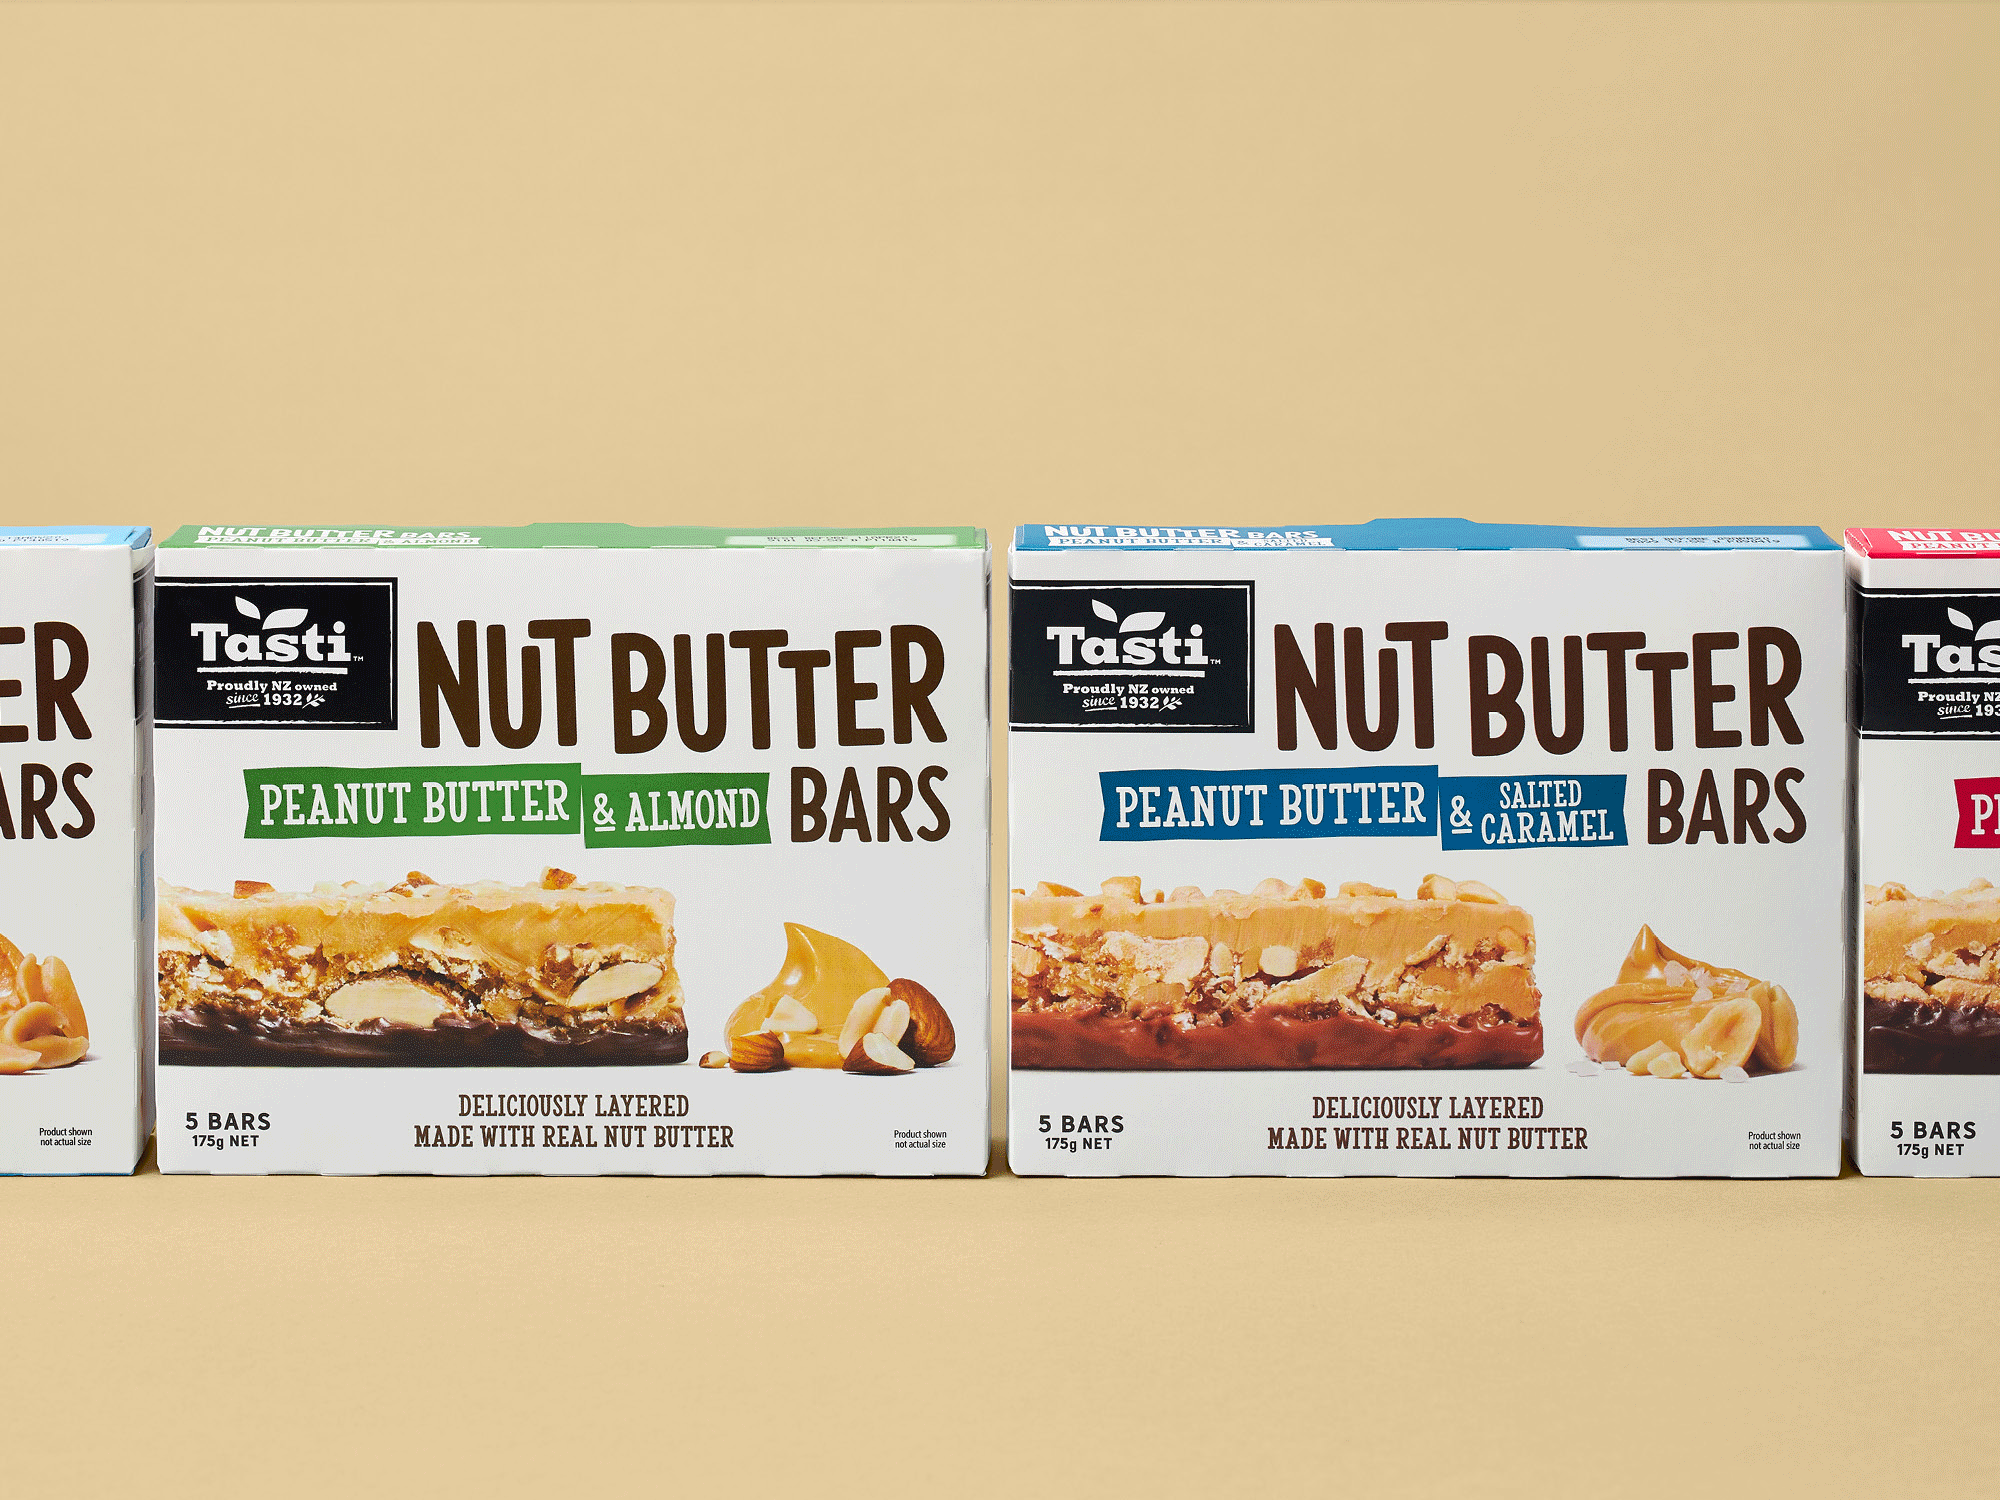 onfire design tast nut butter bar packaging design 8